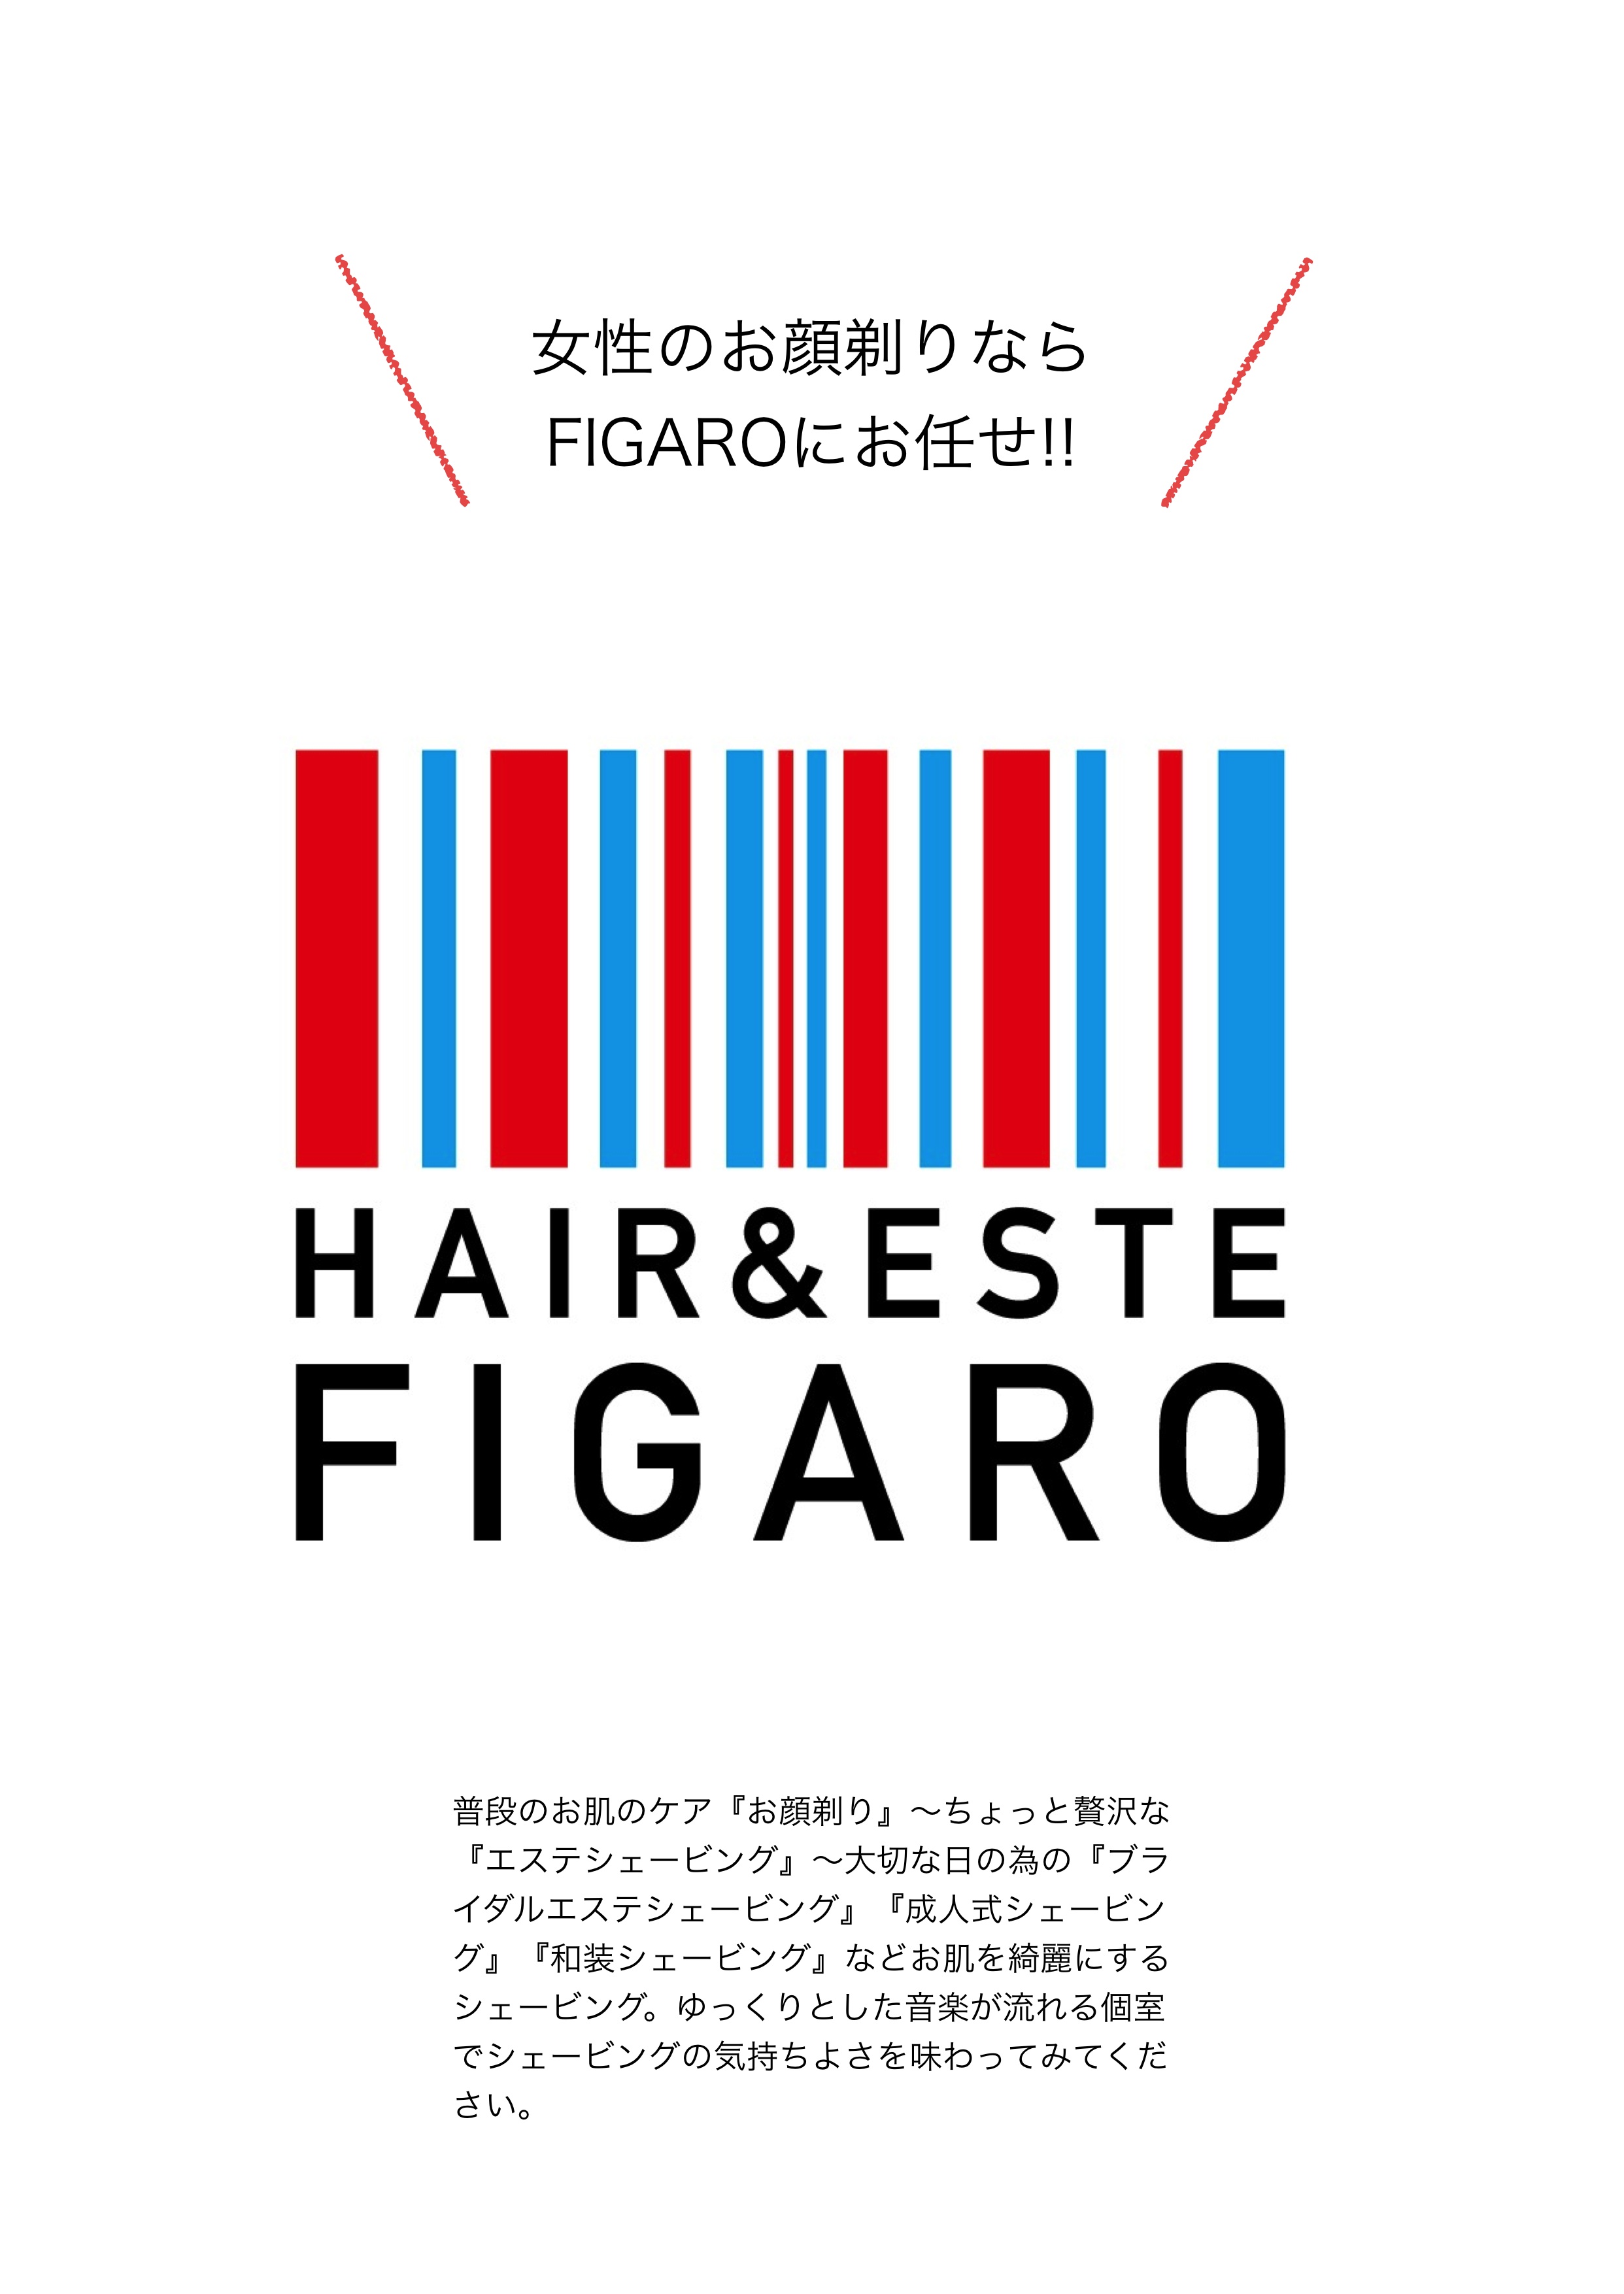 http://figaro-hair.com/blog/%E7%B4%99%E9%9D%A2%EF%BC%91.jpg